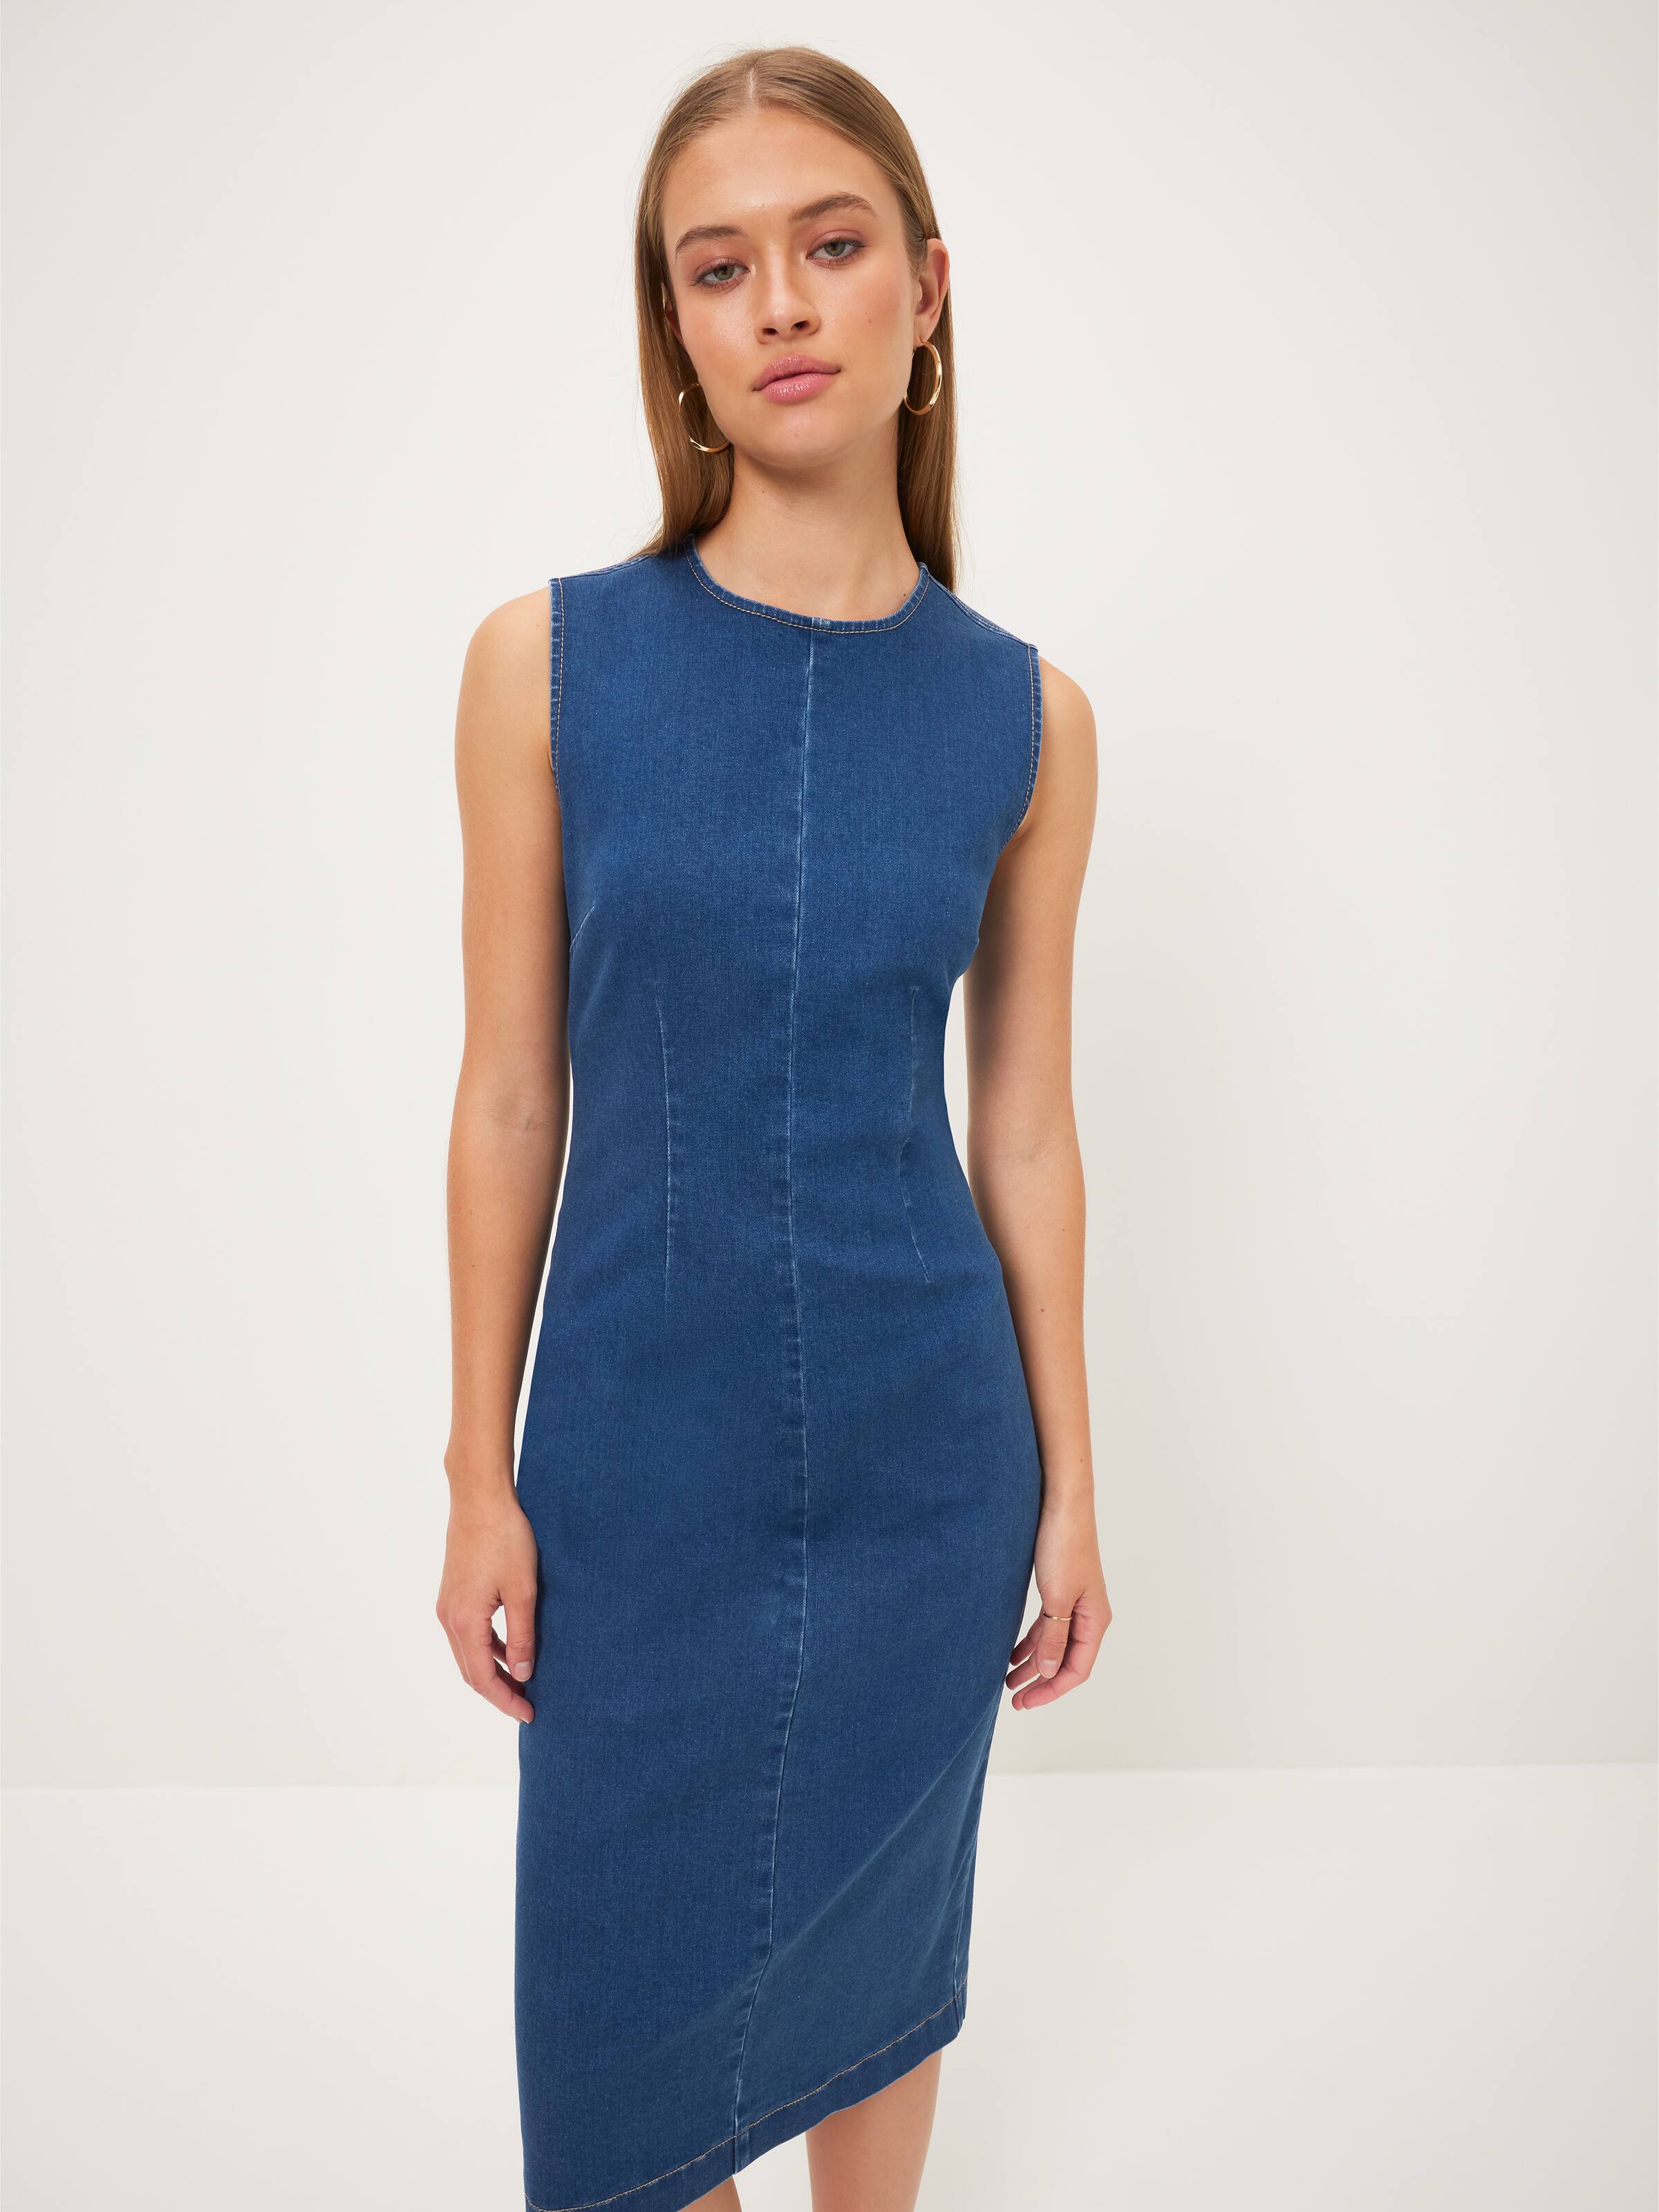 Irresistible Poise Blue Satin Slip Maxi Dress